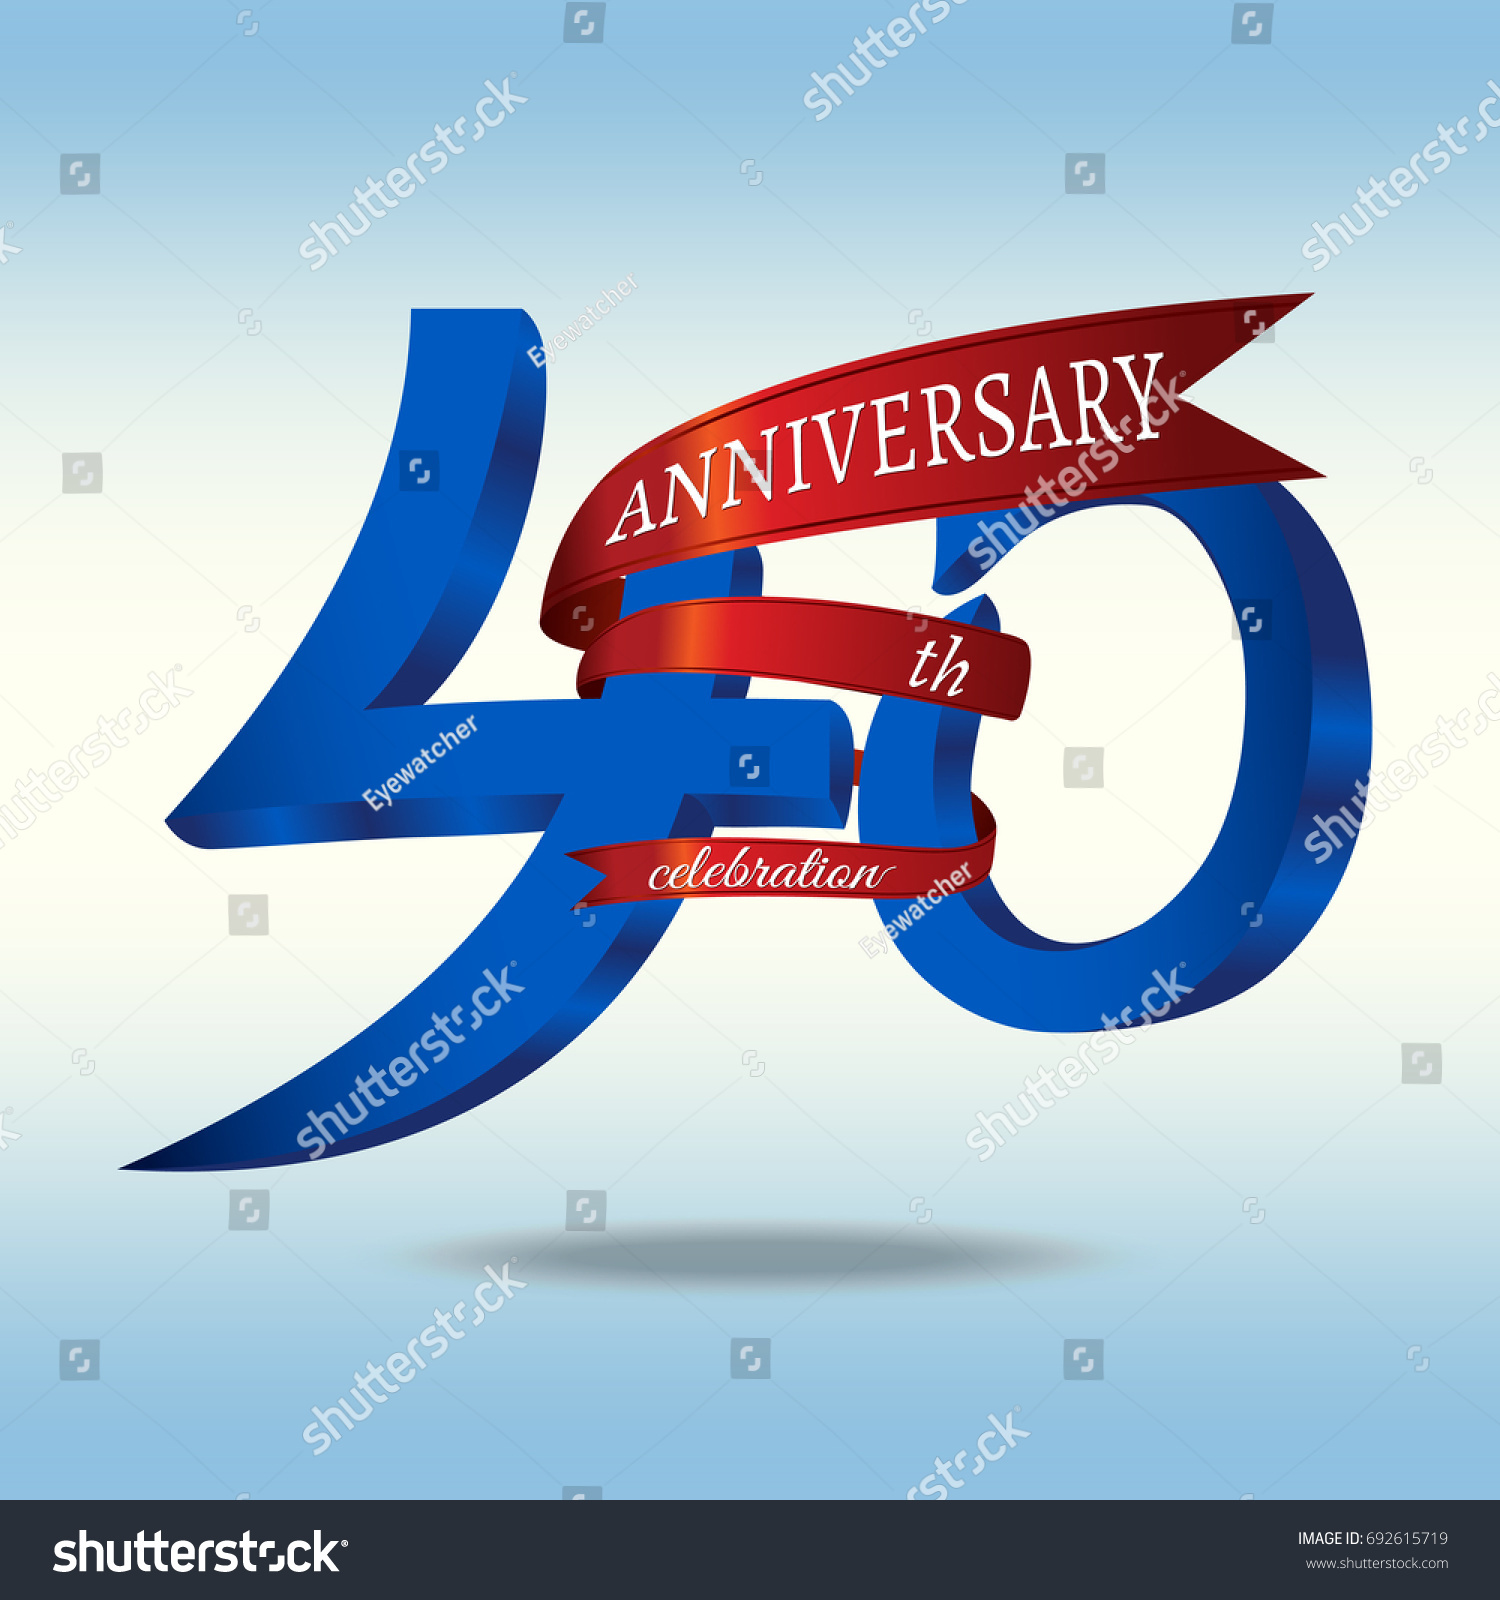 40th-anniversary-symbol-vector-stock-vector-royalty-free-692615719-shutterstock